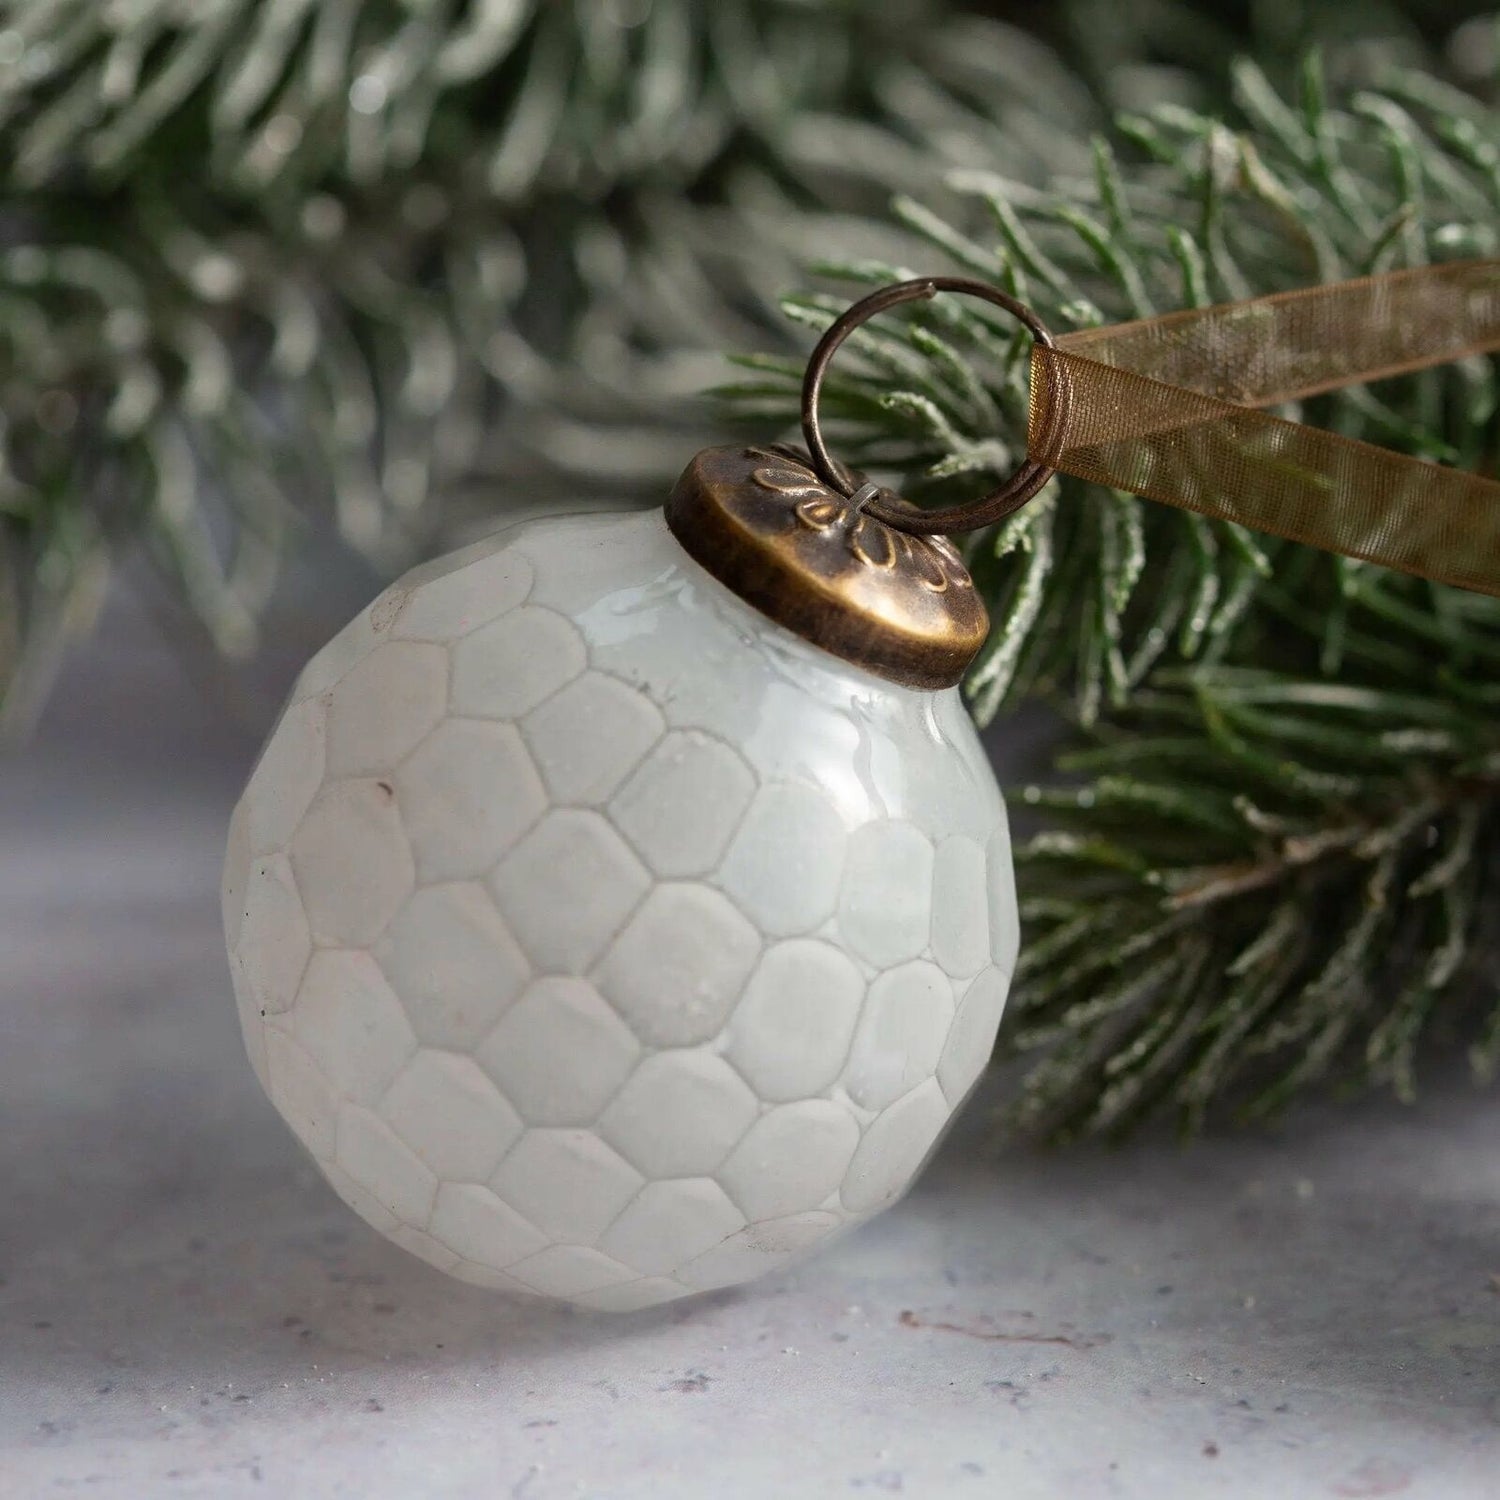 Christmas Handmade 2” Medium Cut Glass Ornament Christmas Bauble - The Primitive Pineapple Collection